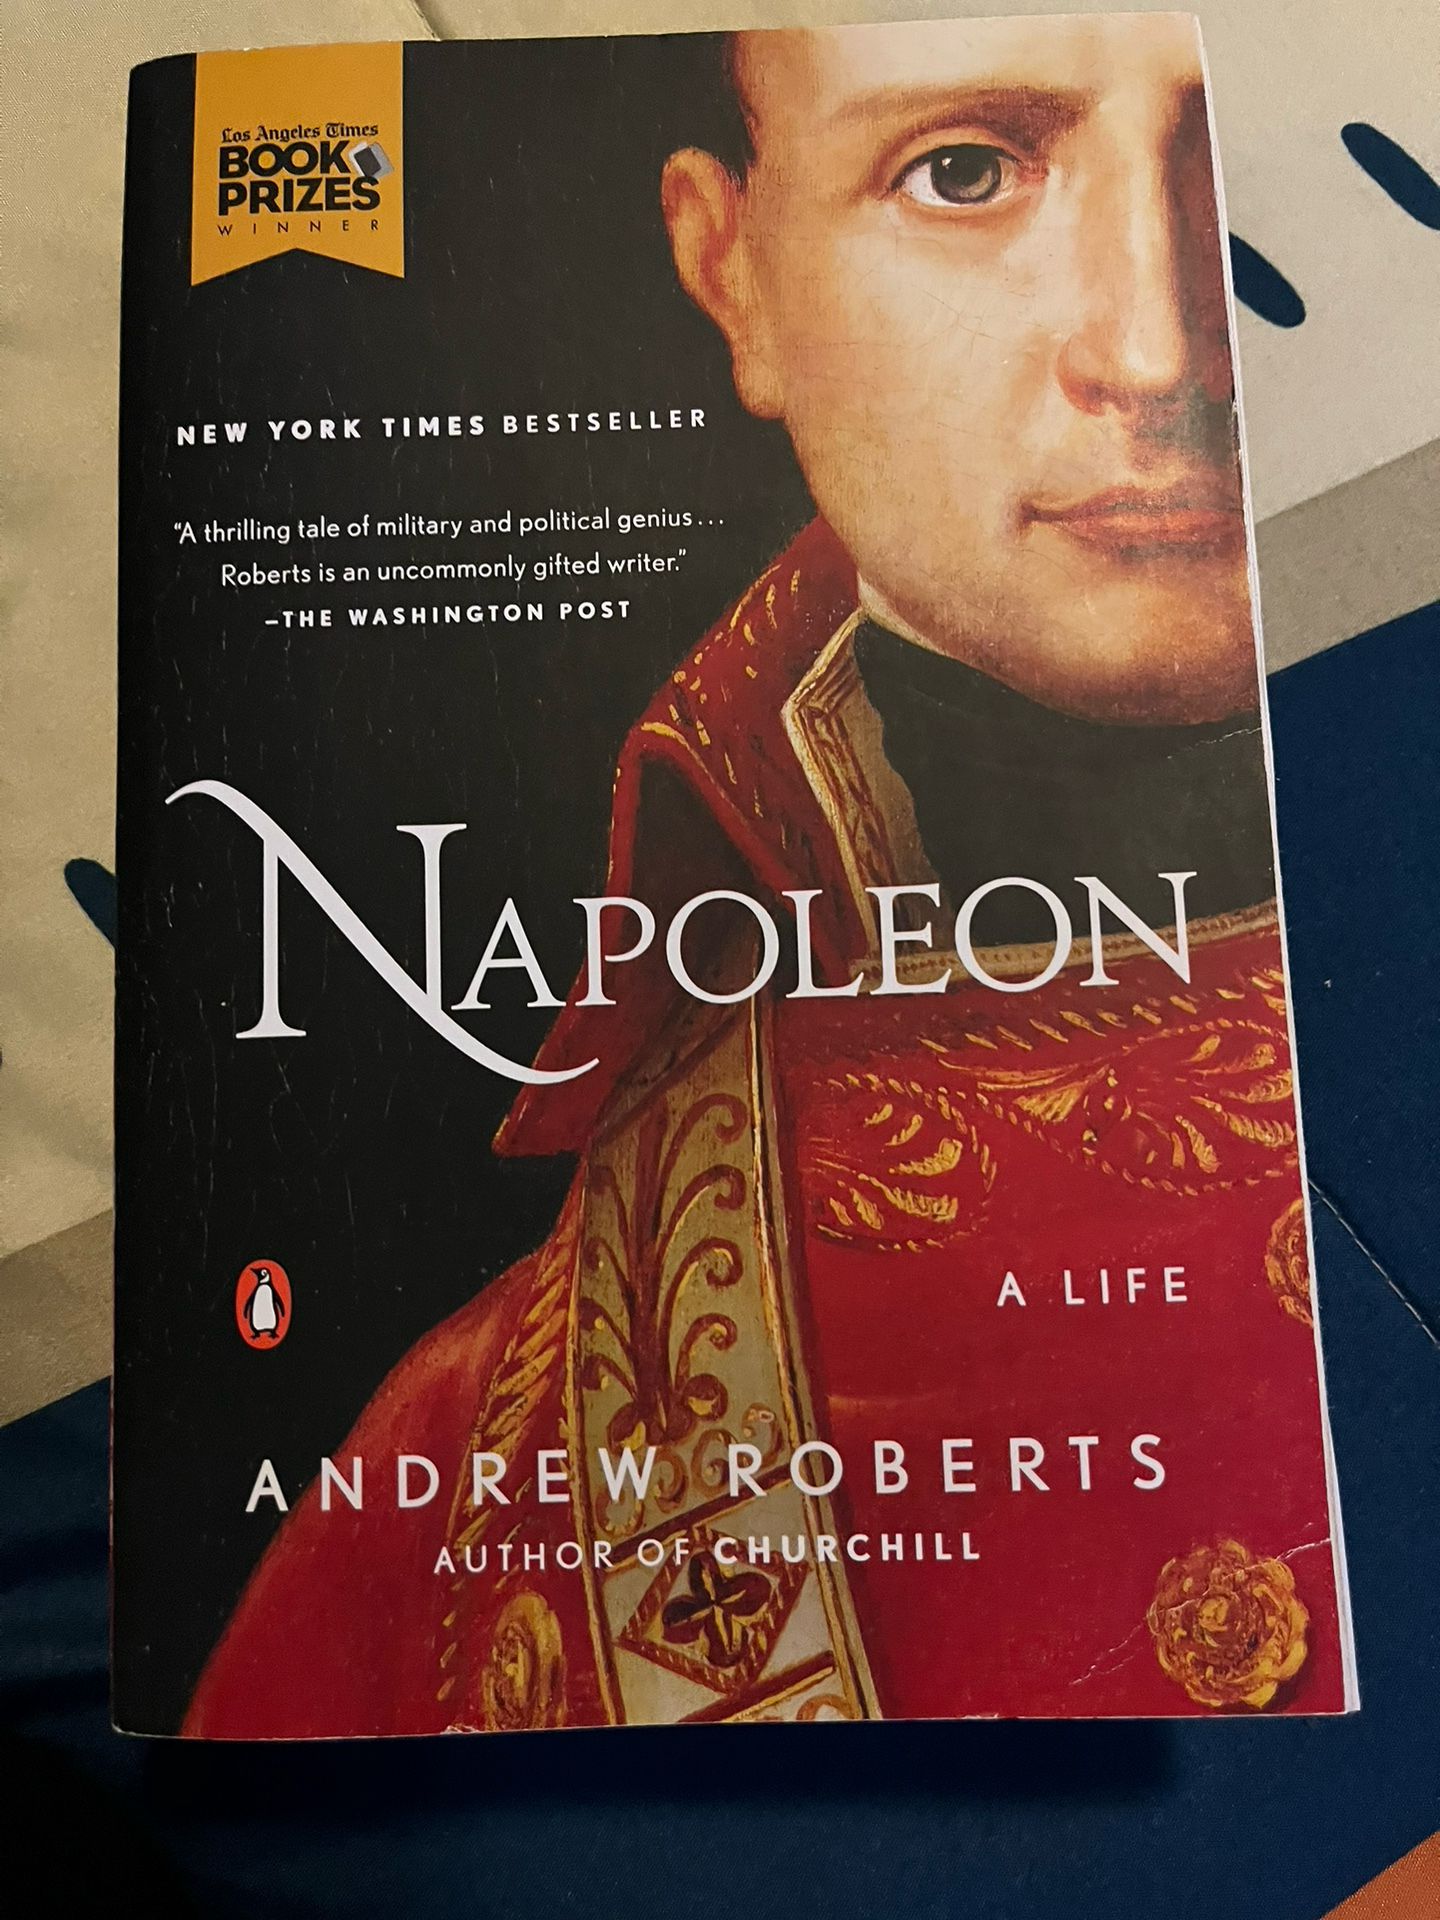 Napoleon book